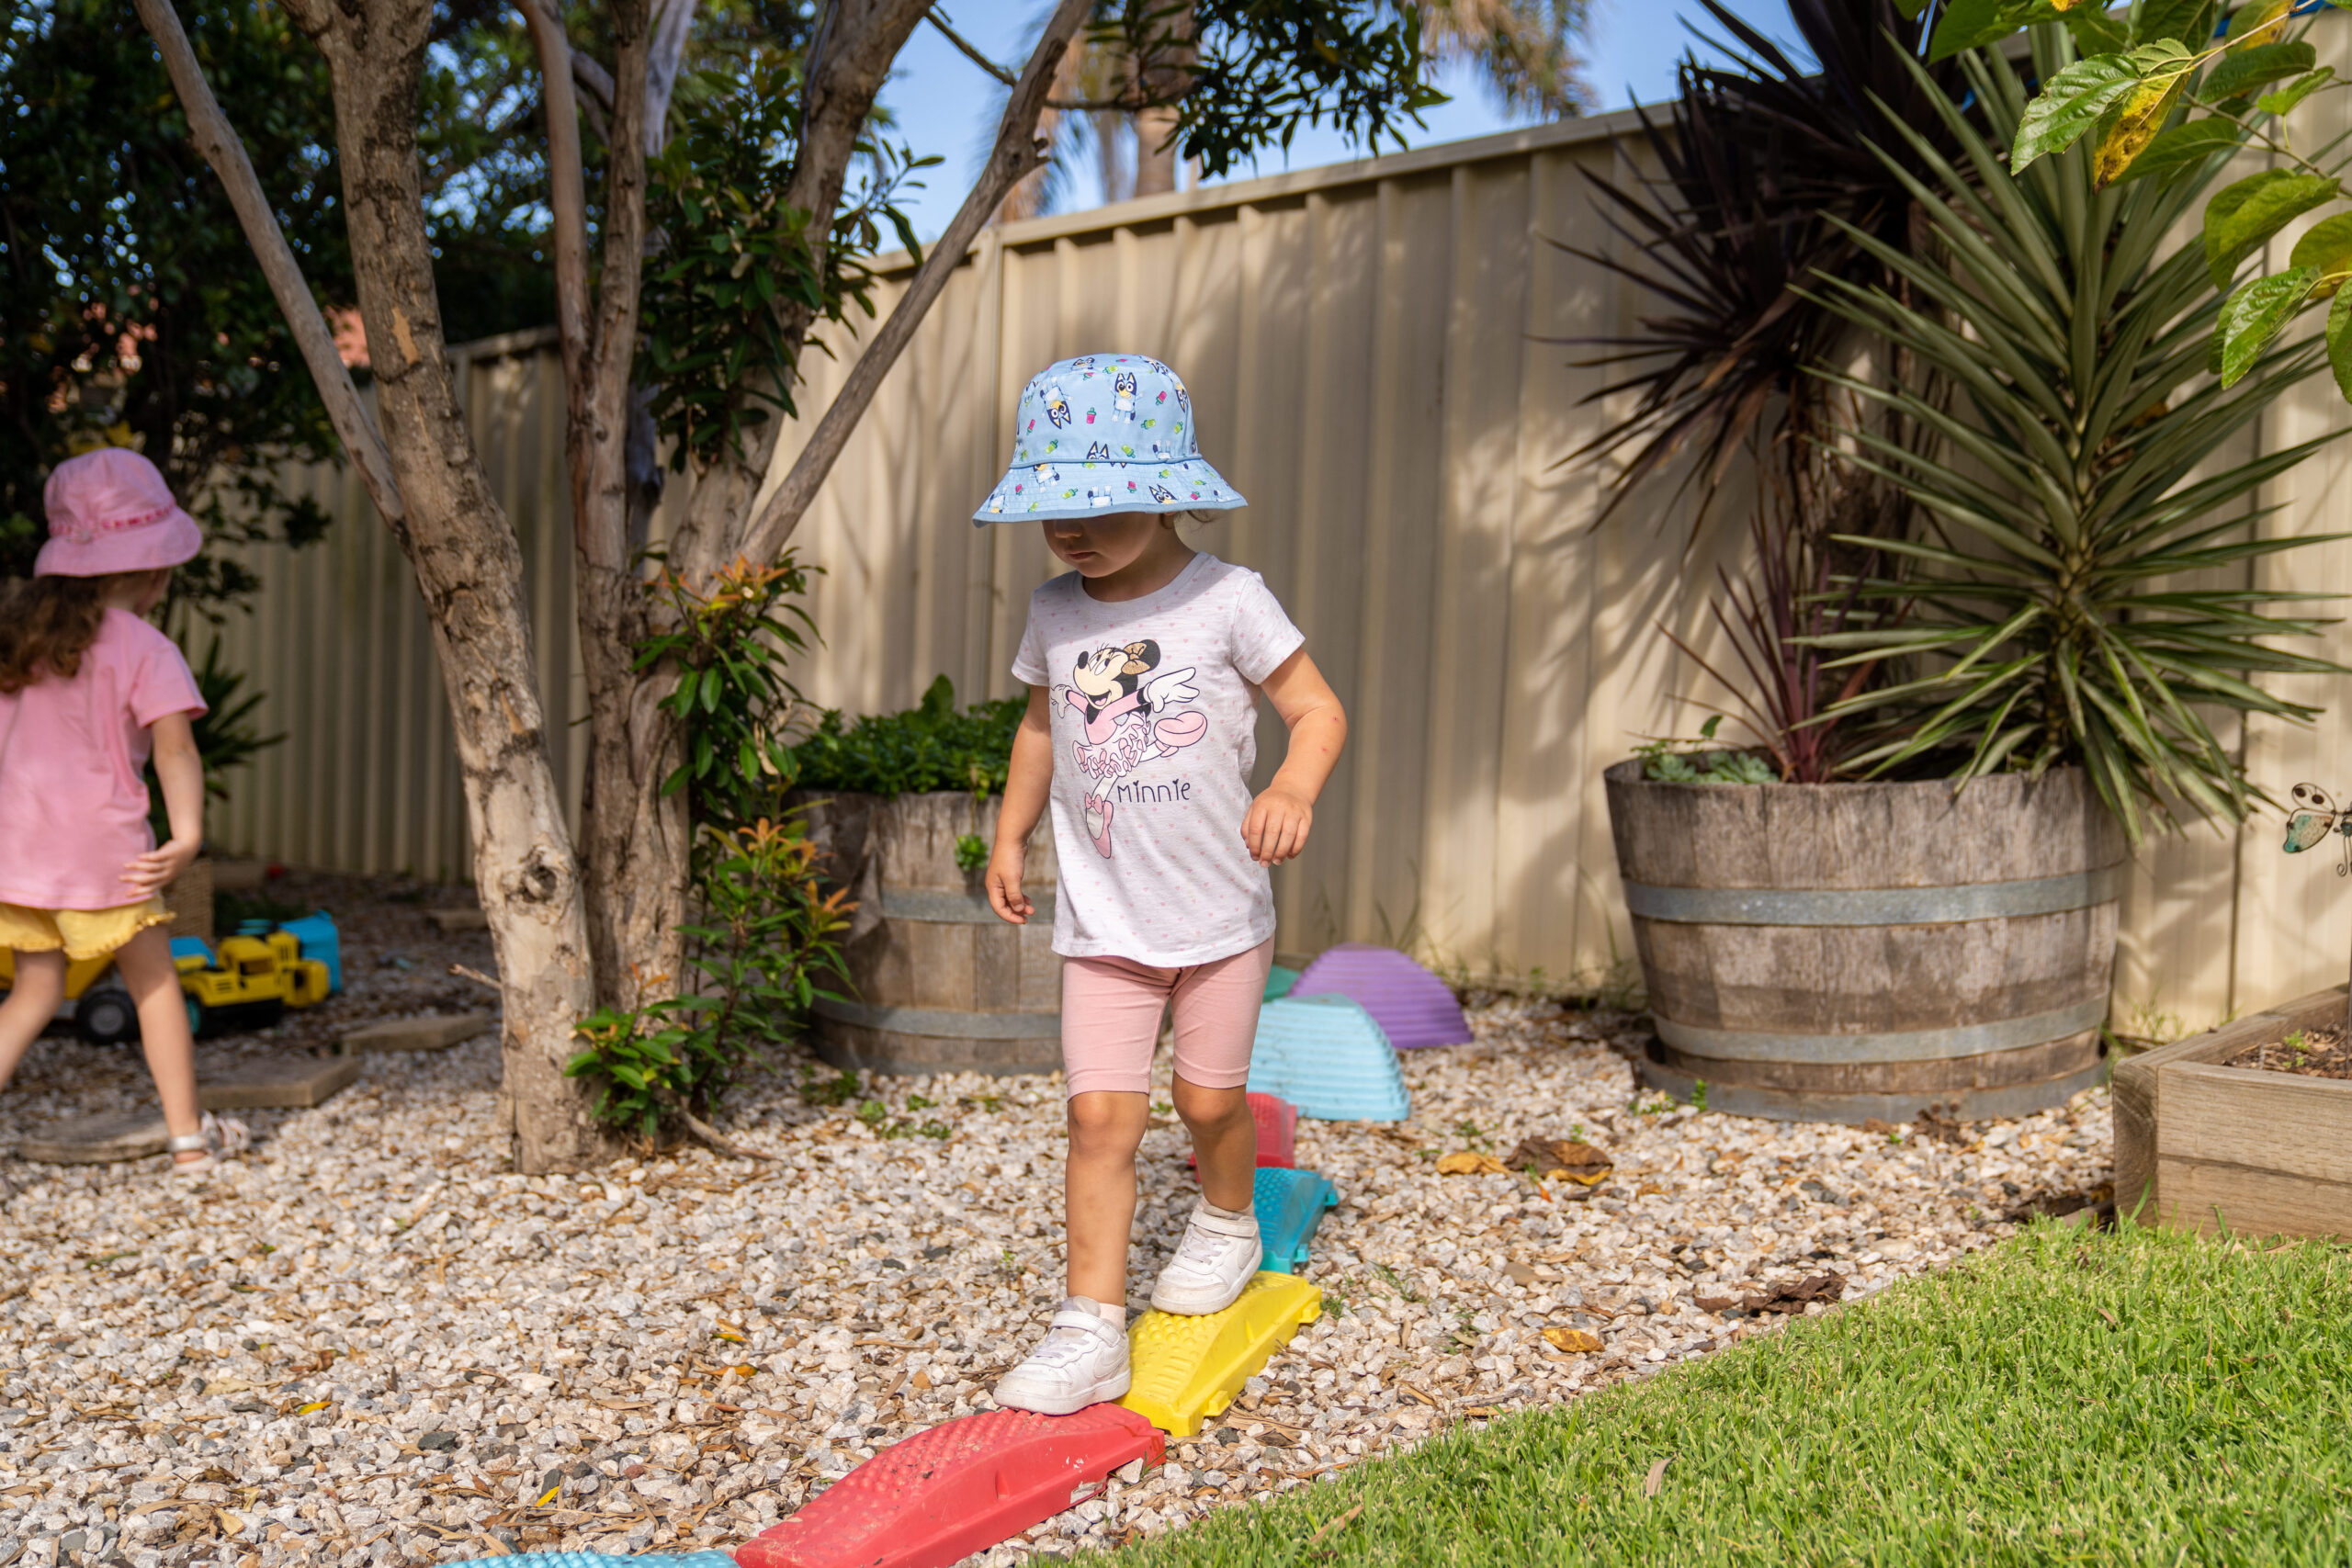 play area at growing stars montessori flinders nsw